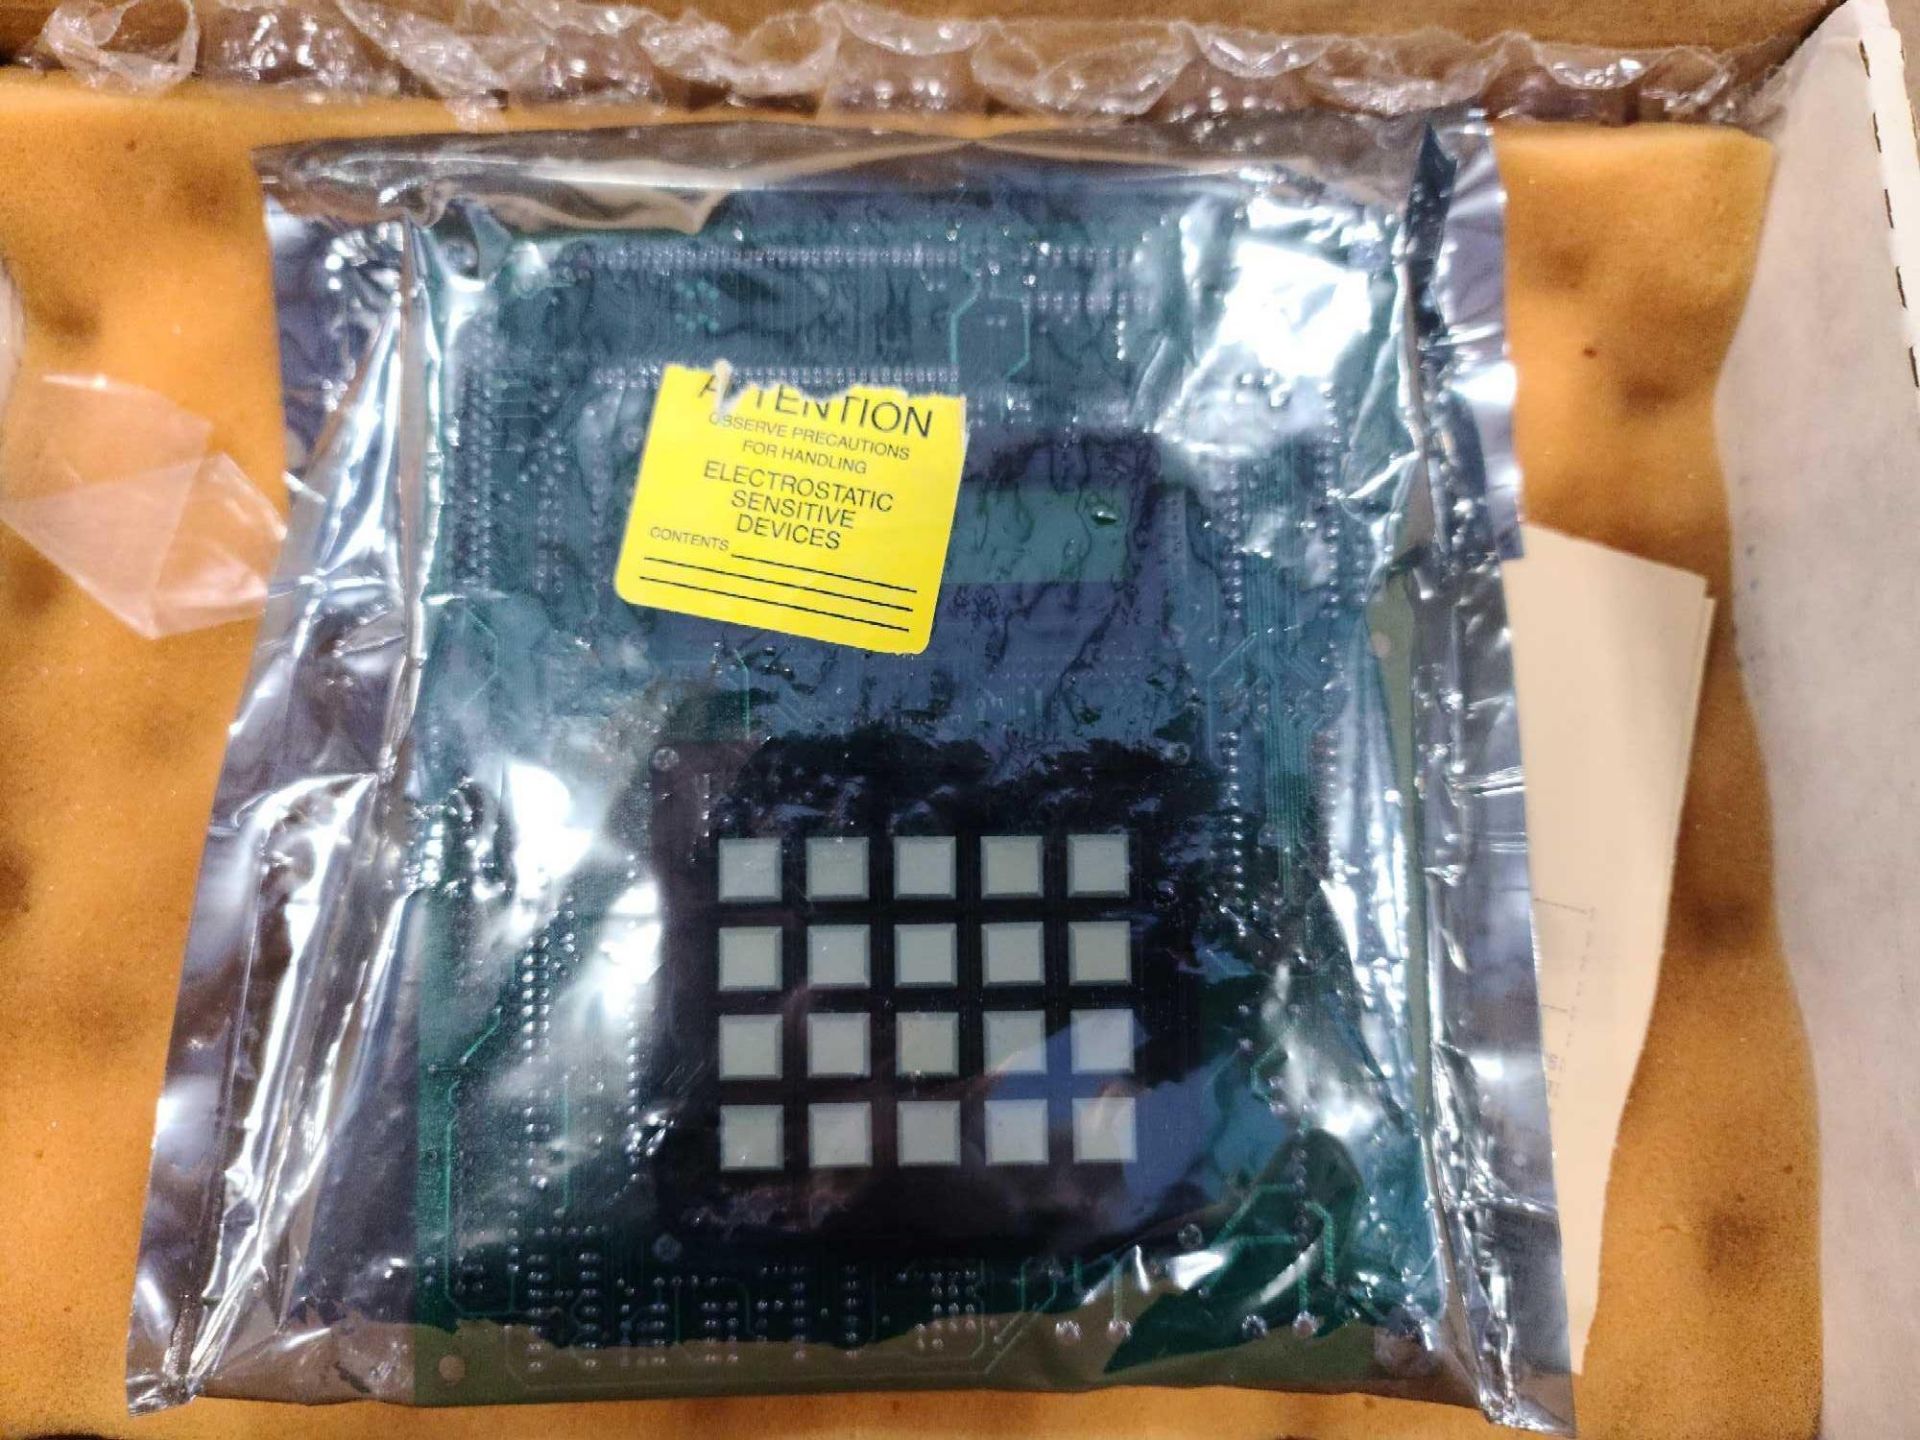 Kore Dynapar Microprocessor Temperature Controller - New in Box - Image 2 of 3